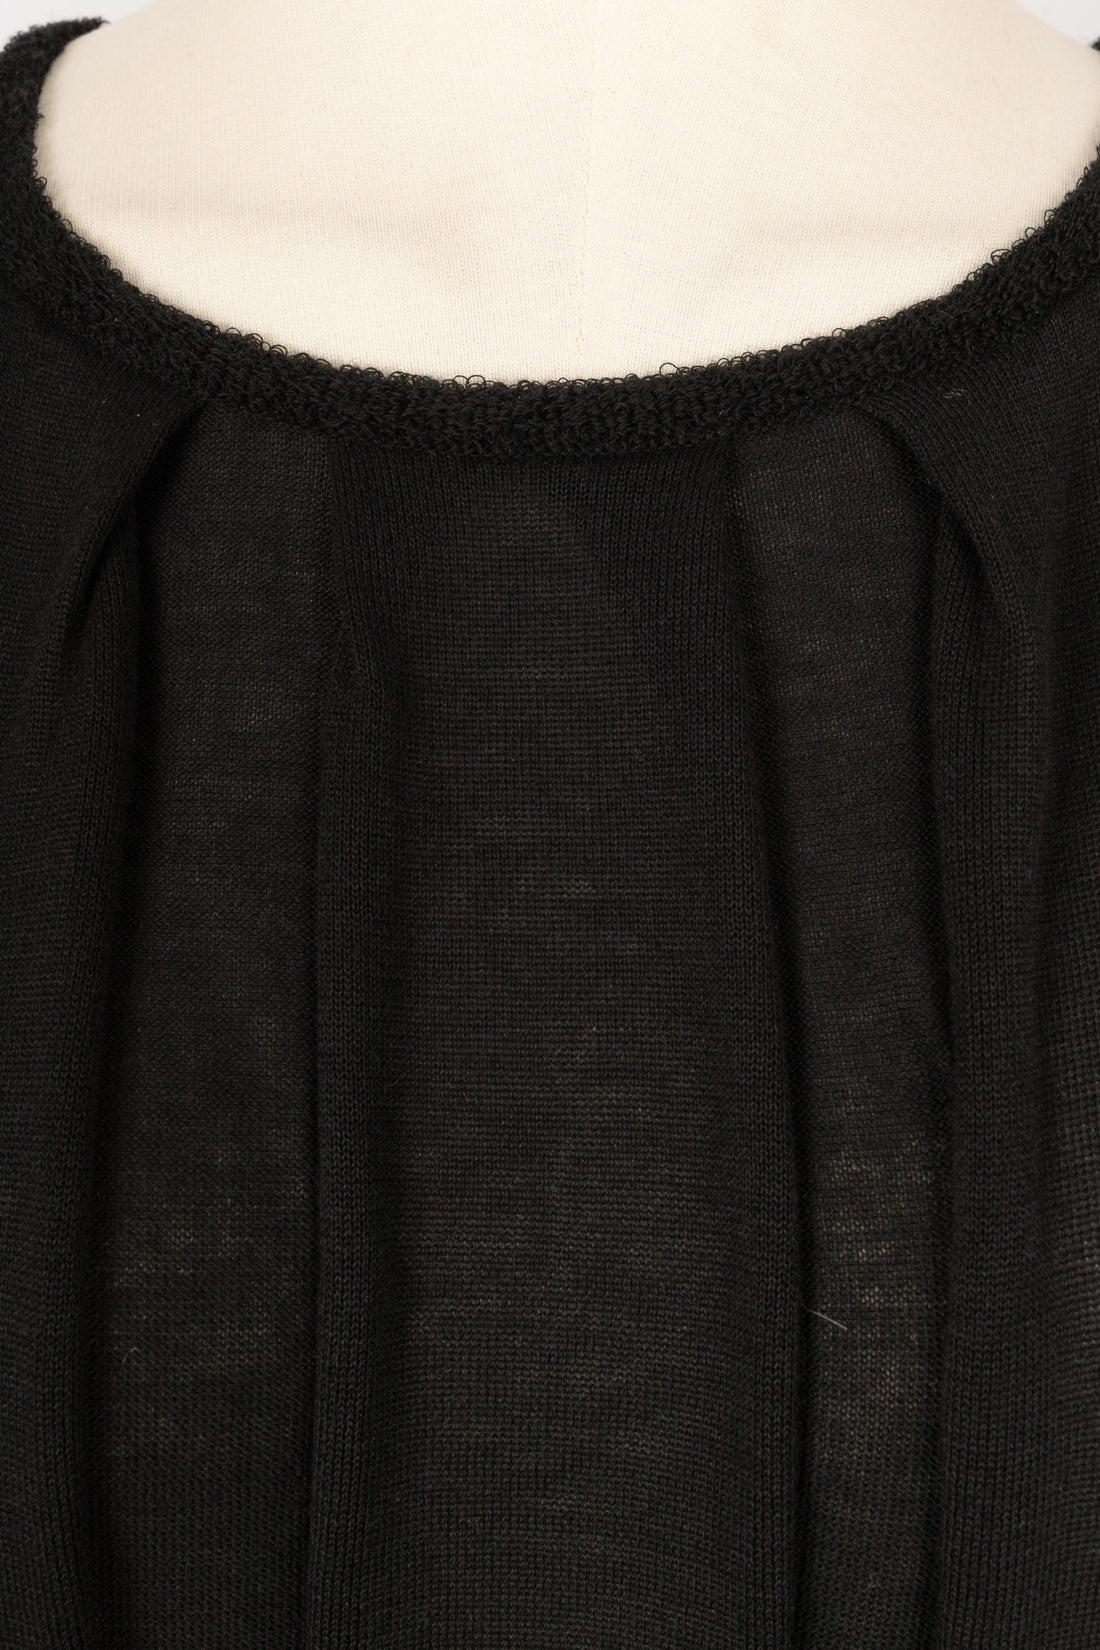 Chanel Black Mesh Sleeveless Top For Sale 1